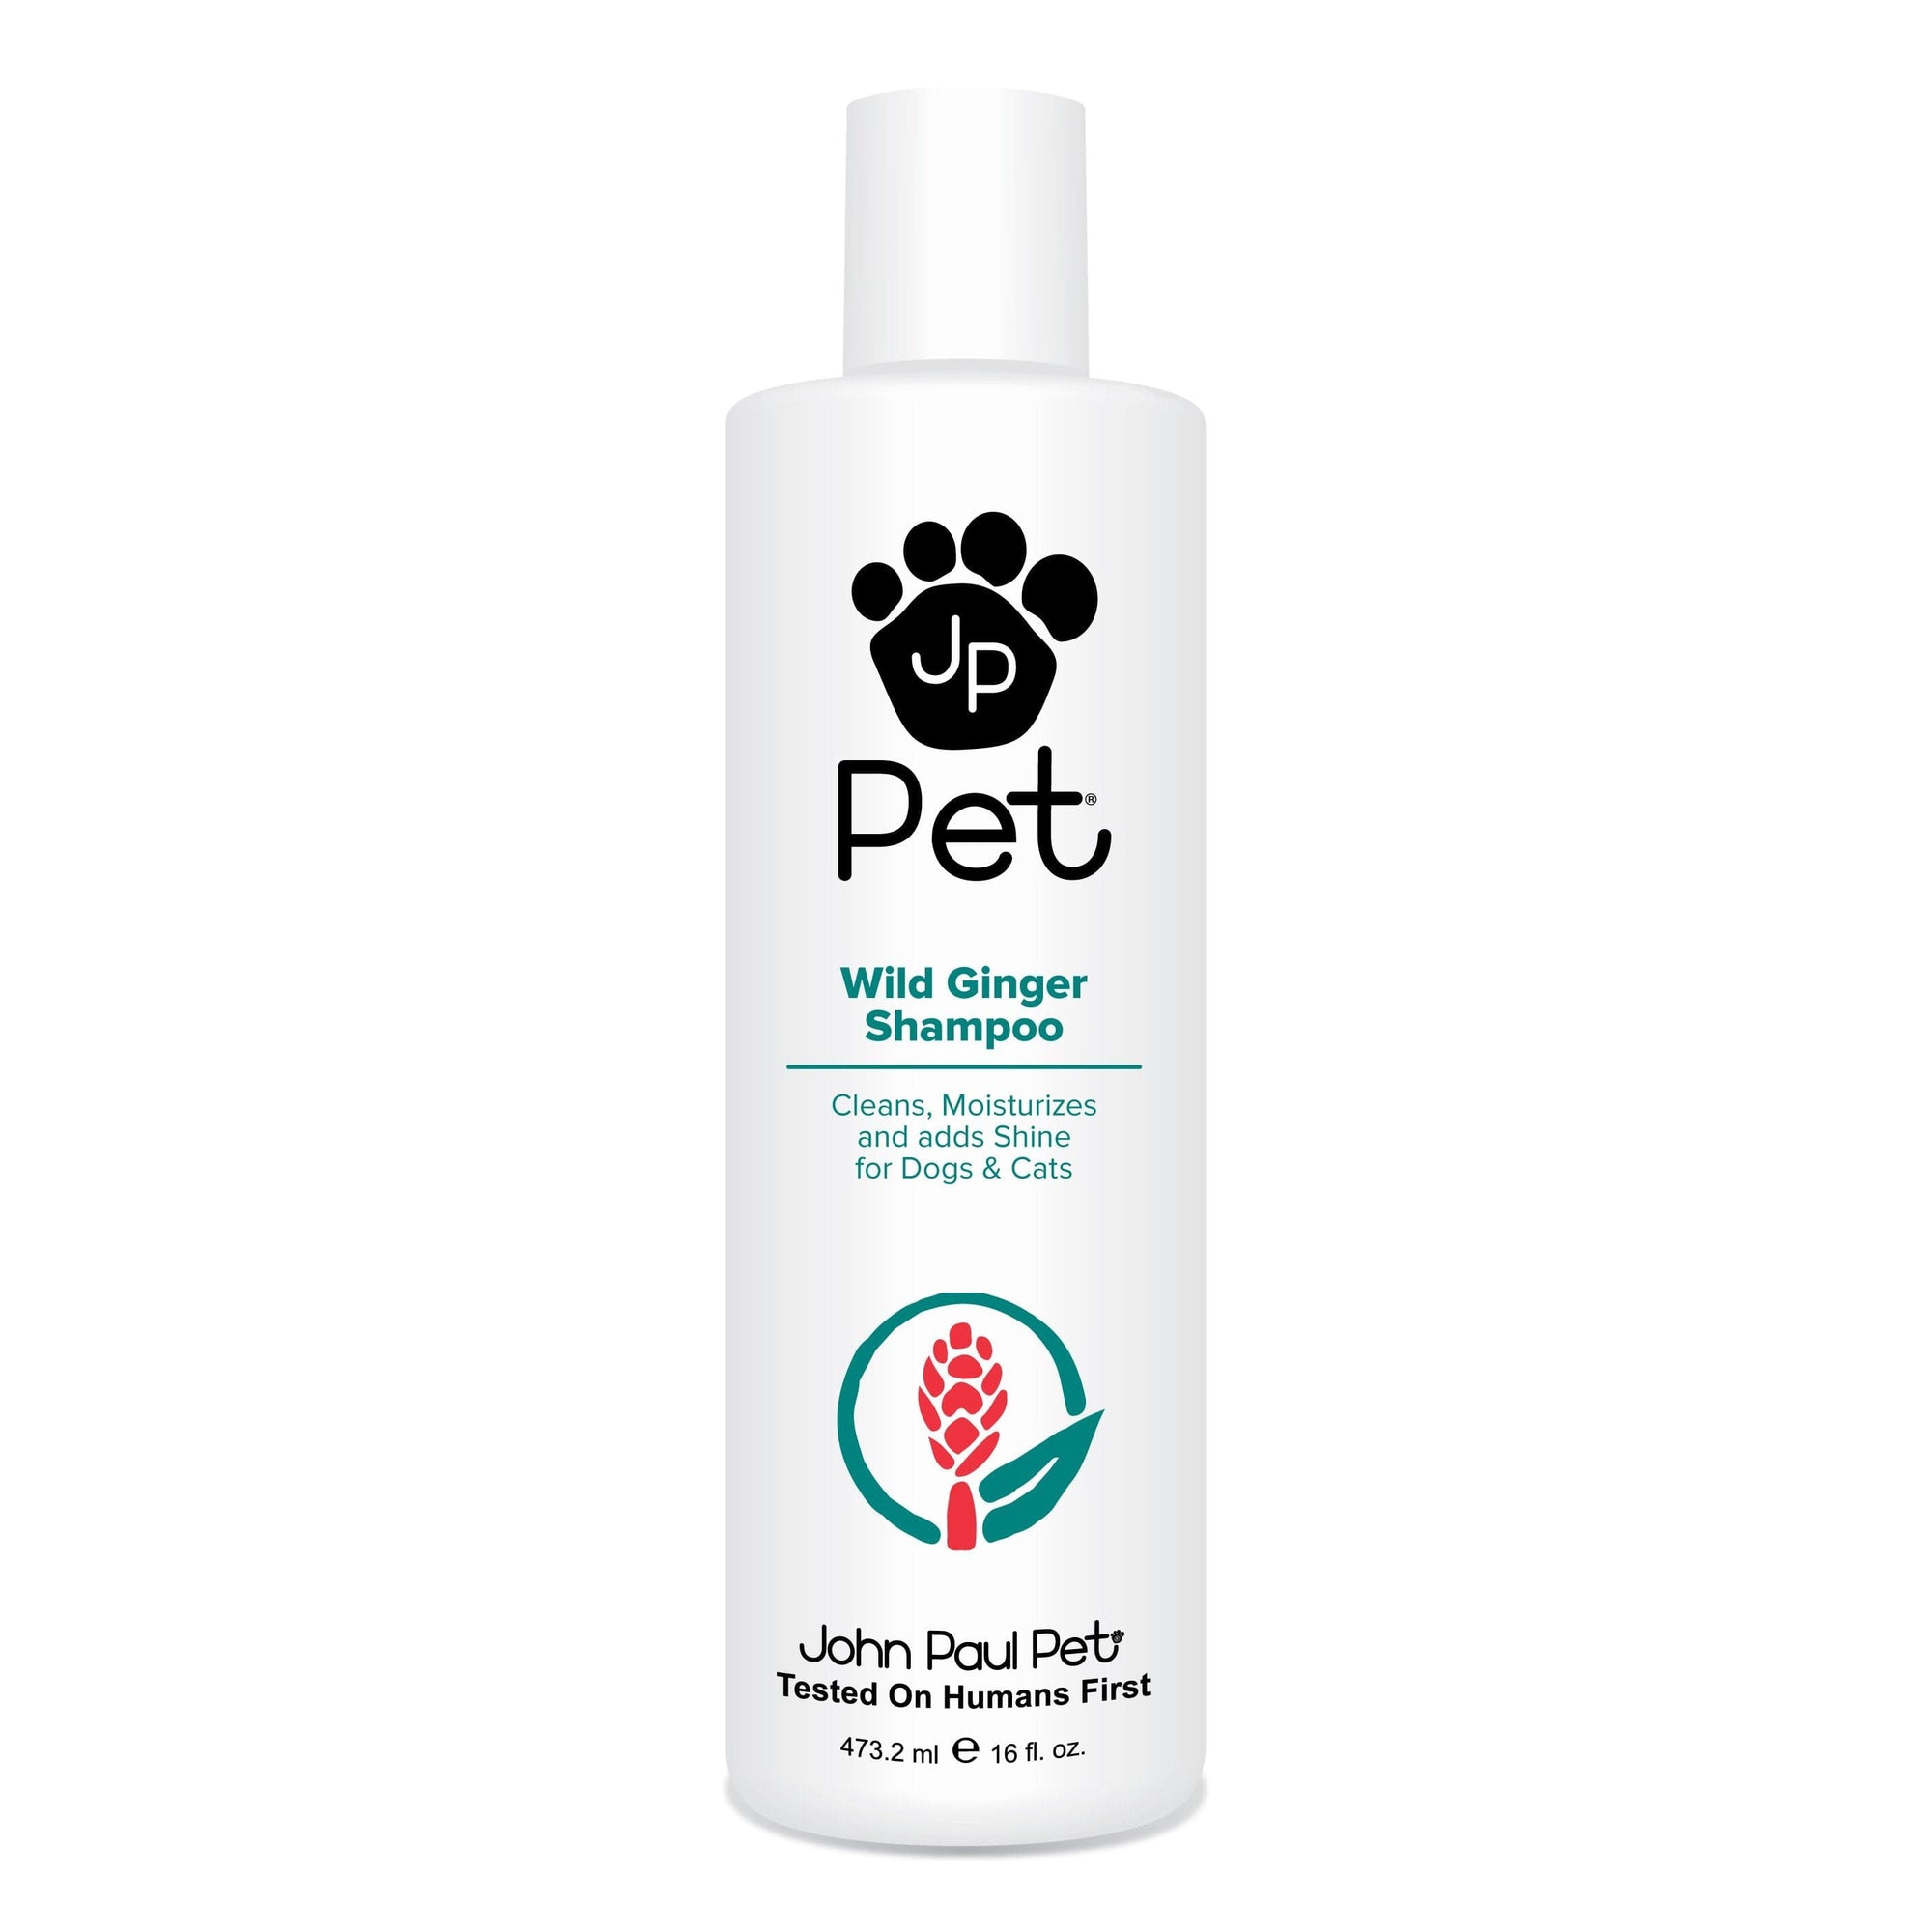 JP Pet Wild Ginger Shampoo 473ml Pet - JP Pet - Luxe Pacifique